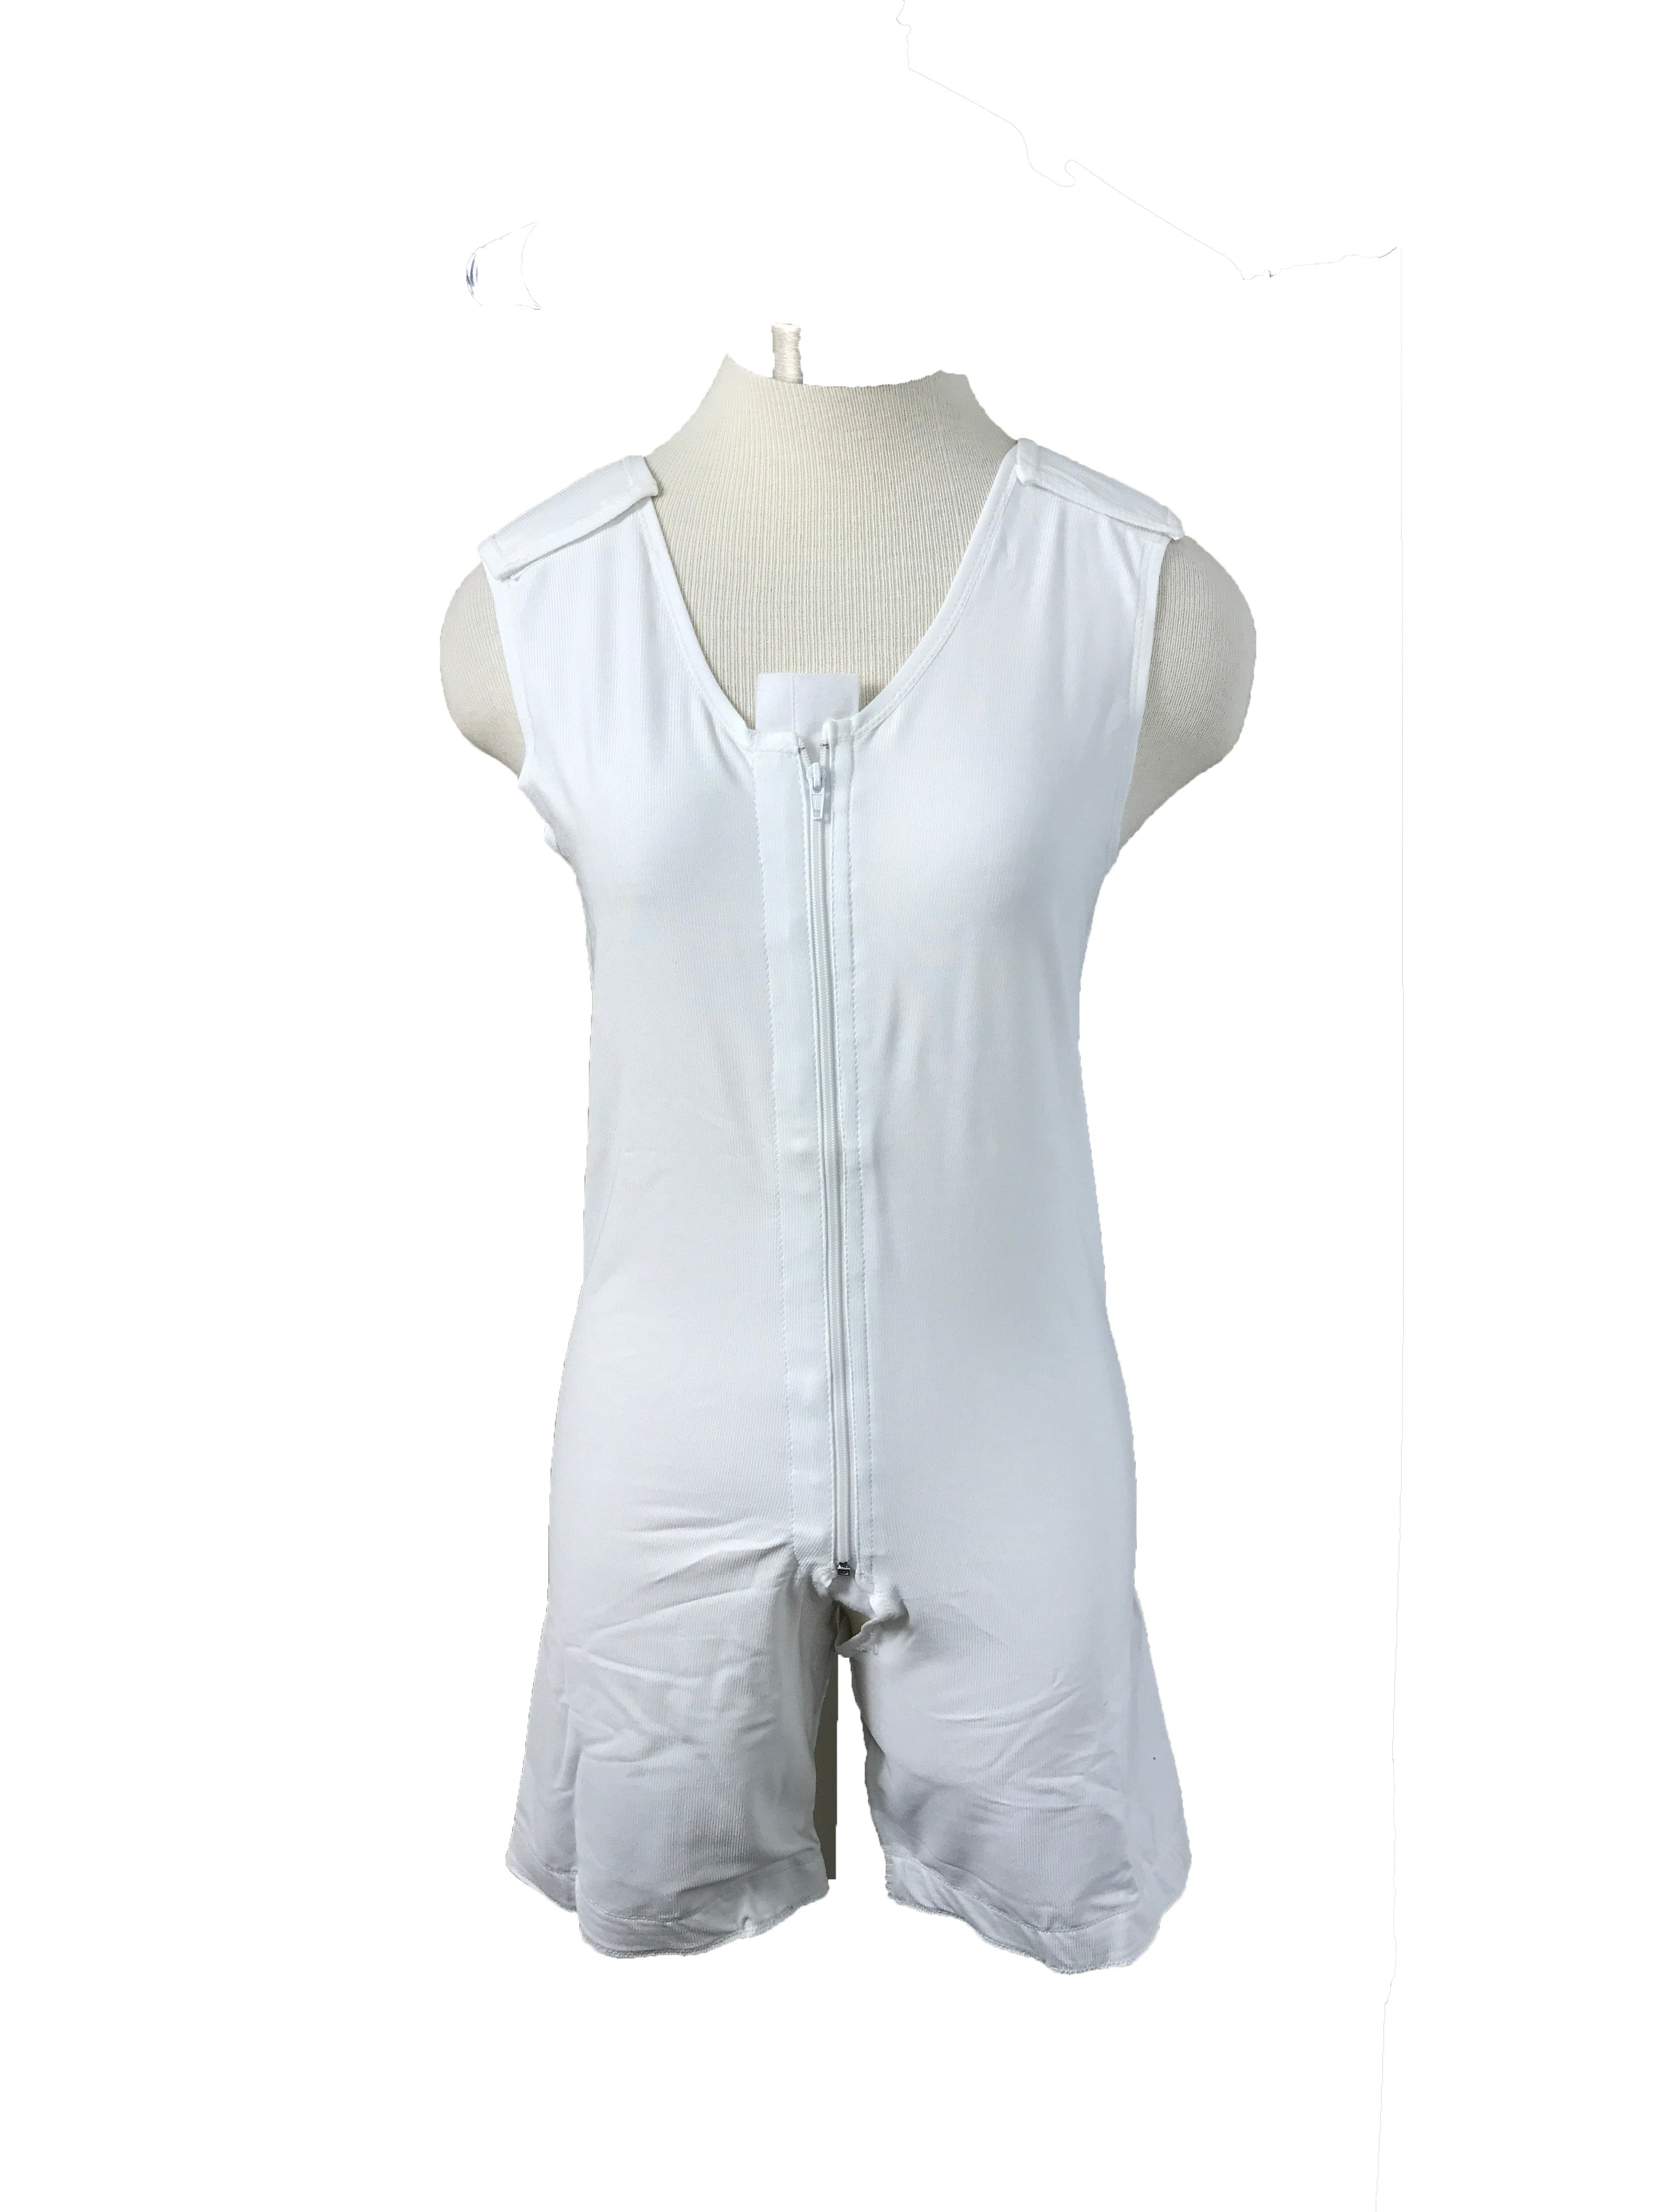 Marena ComfortWear Compression and Support Garment White Bodysuit Men's Size 2XL